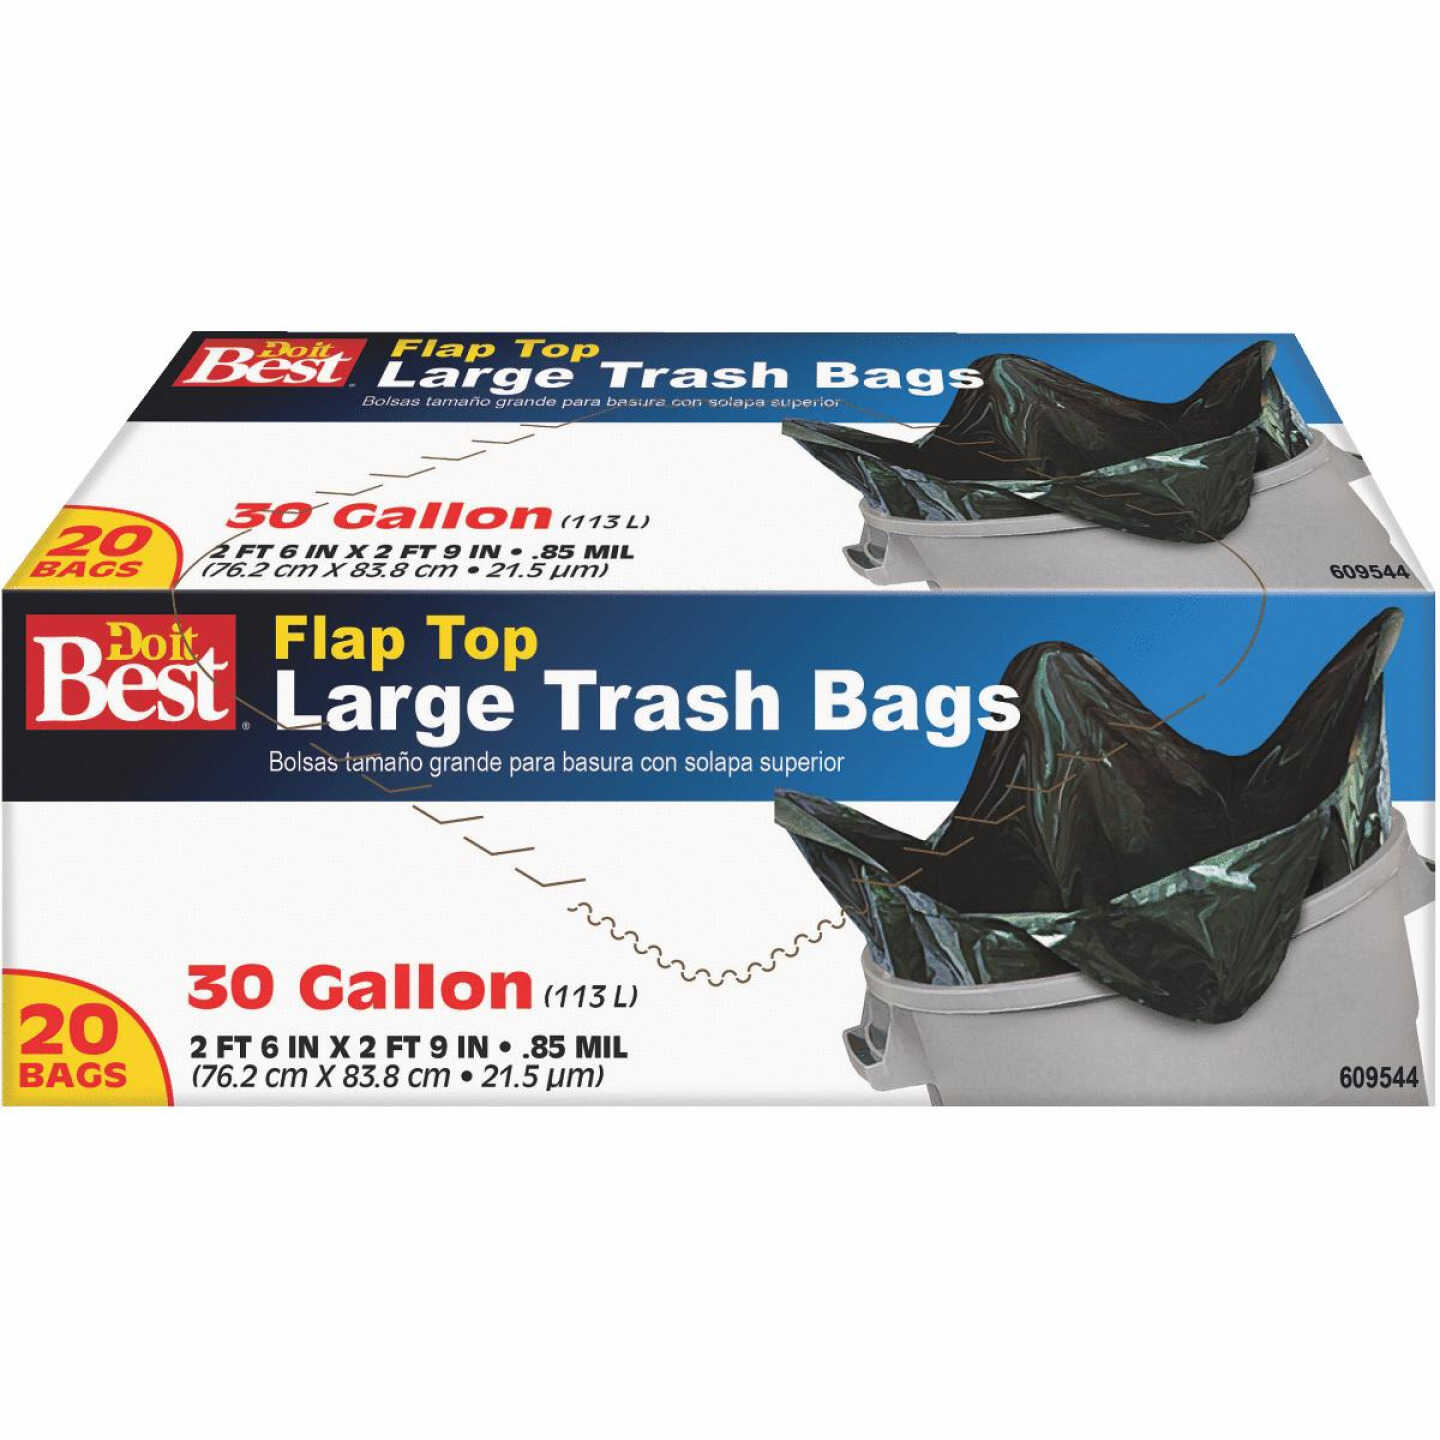 Trash Bags - Contractor Trash Bags 20ct